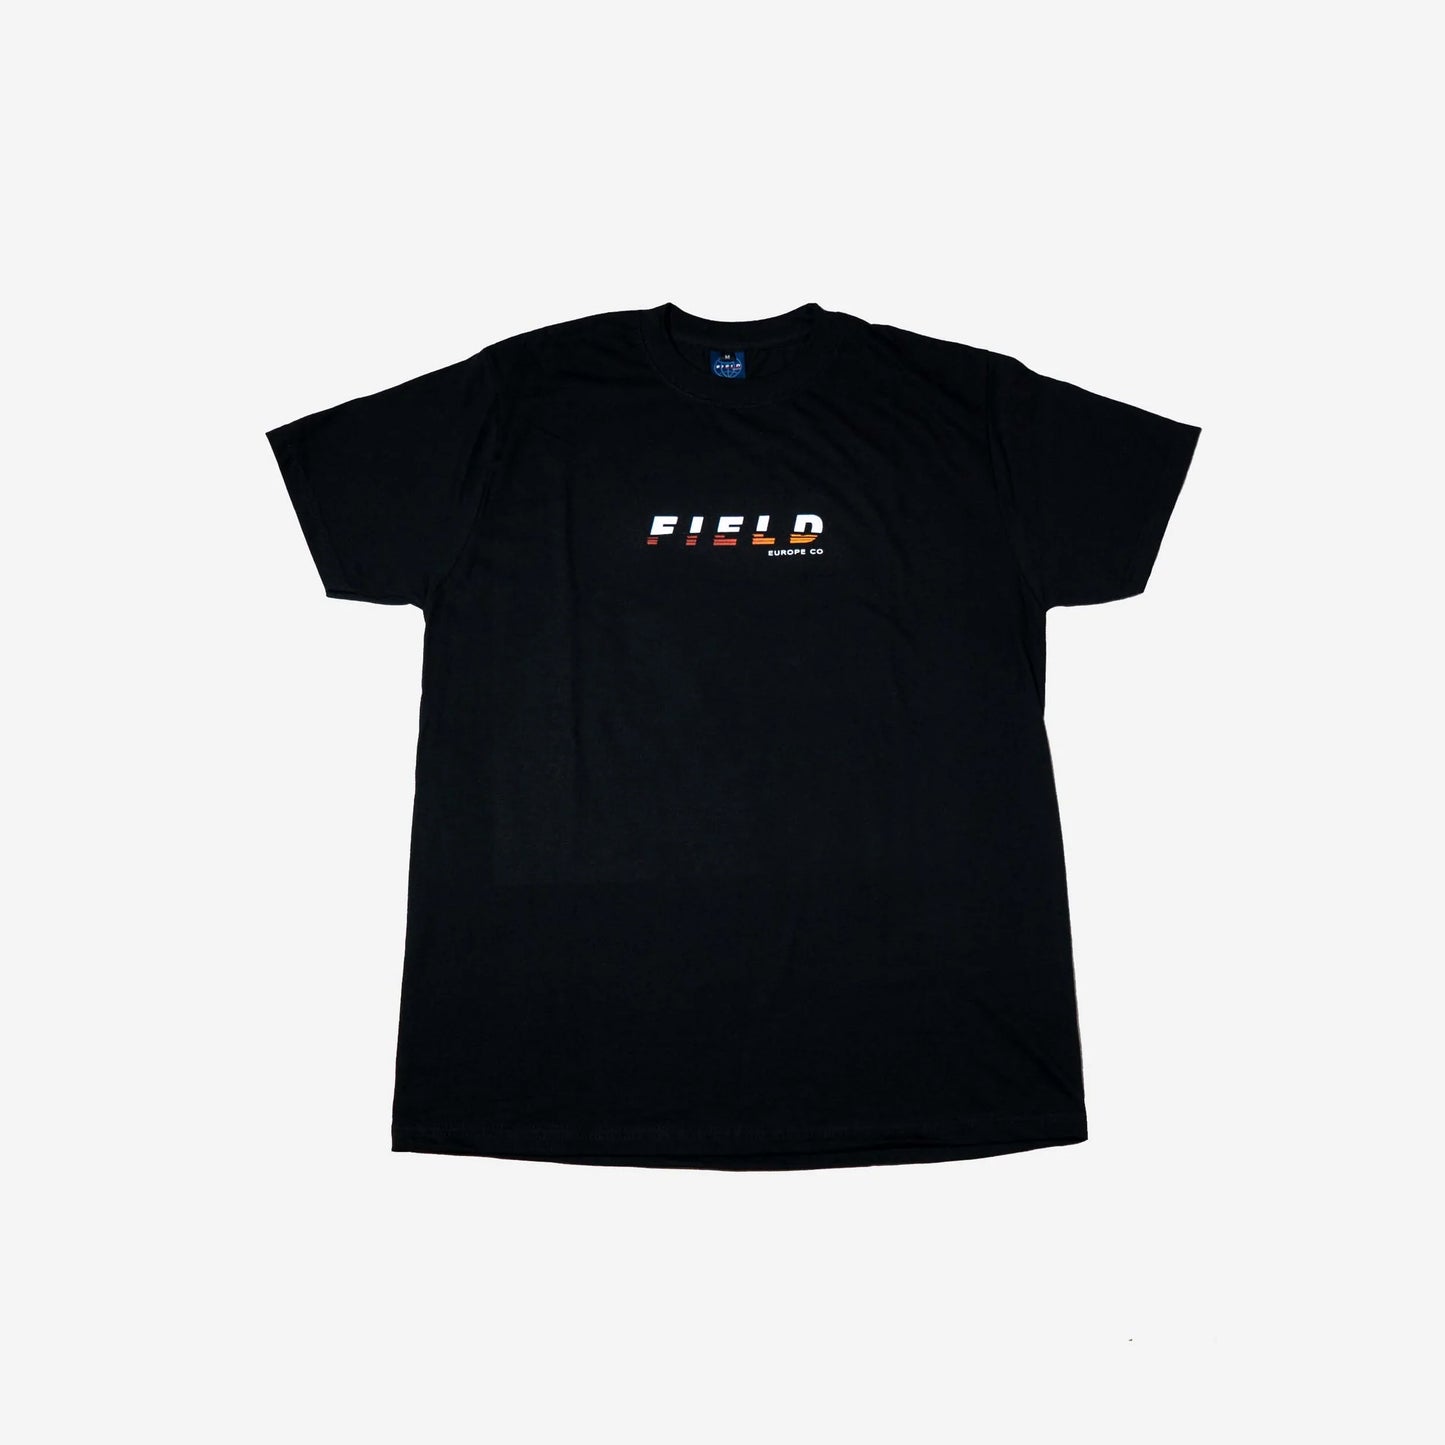 Field Europe Co. Camiseta clásica negra